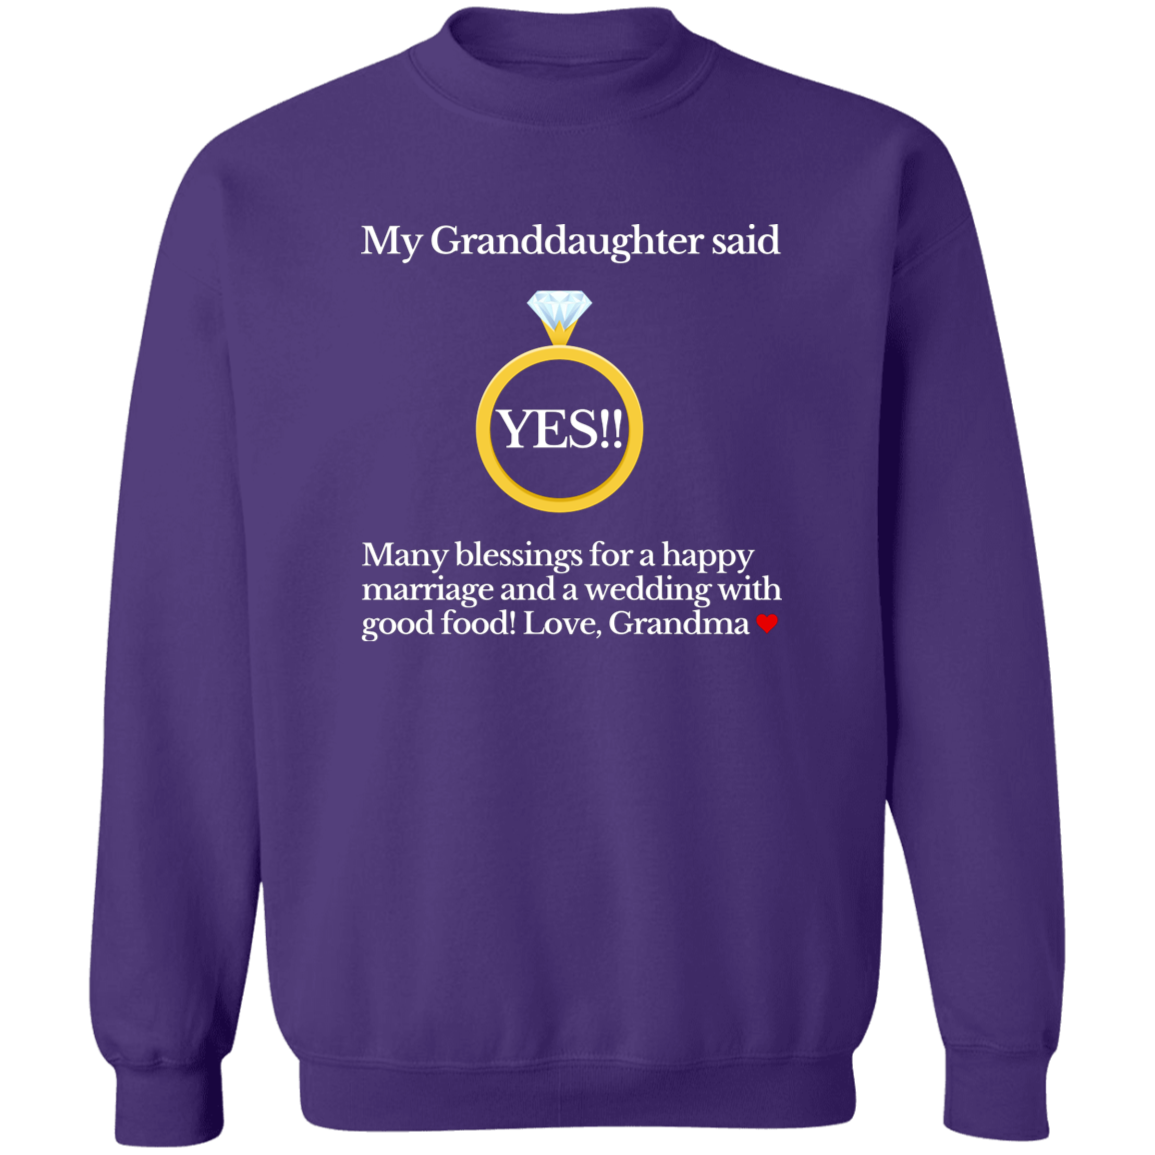 yes granddaughter grandma black G180 Crewneck Pullover Sweatshirt